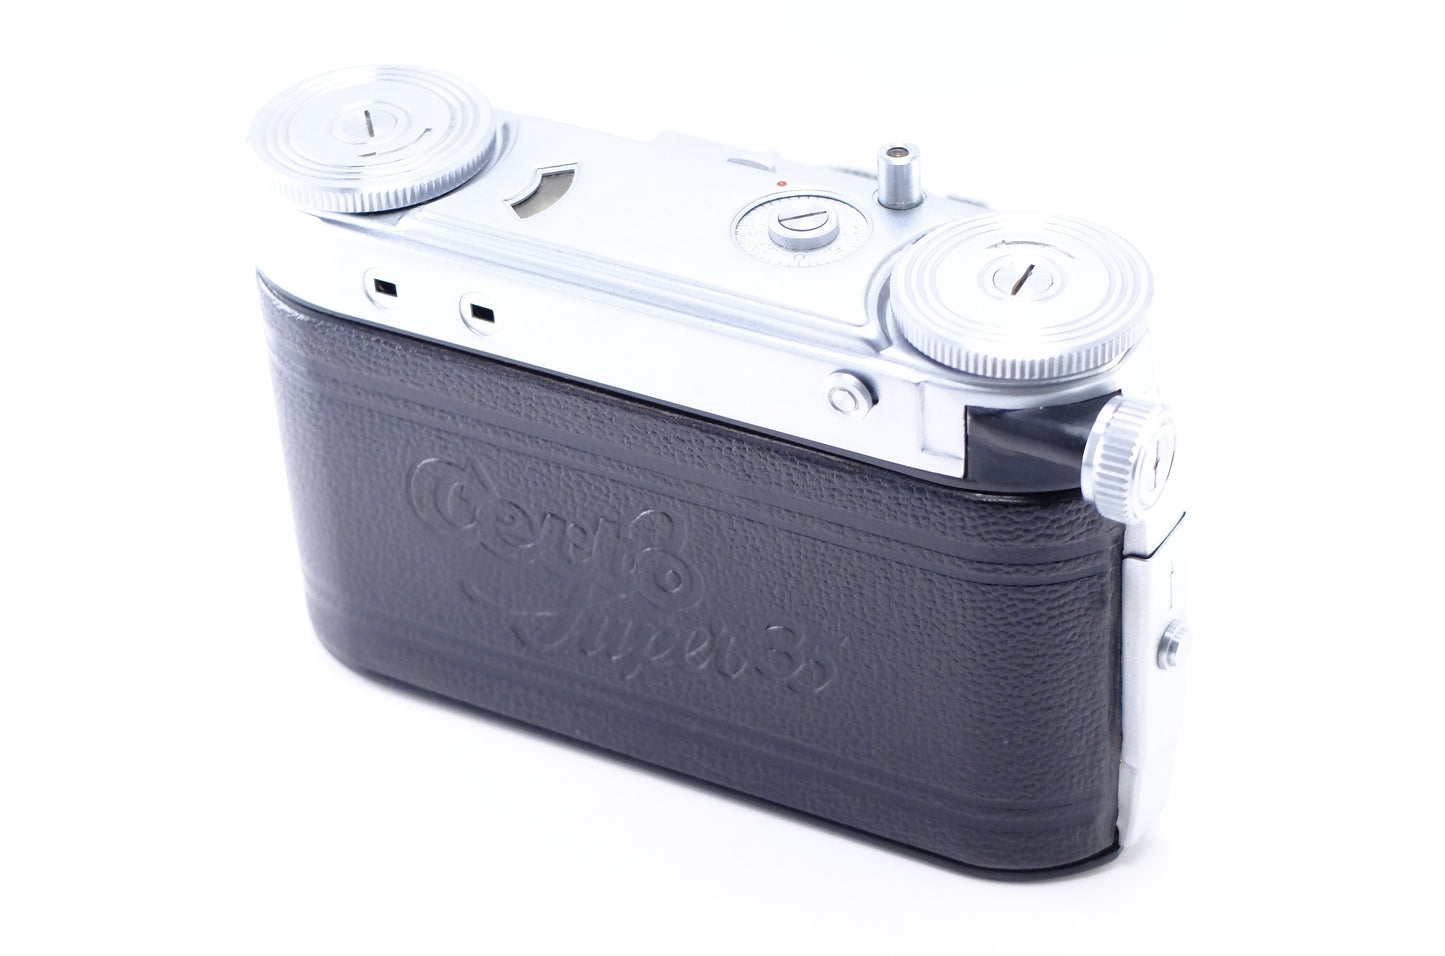 【Certo】ツェルト Super35 (Super Dollina IIと同型) 35mm判スプリングカメラ [1944799348168]